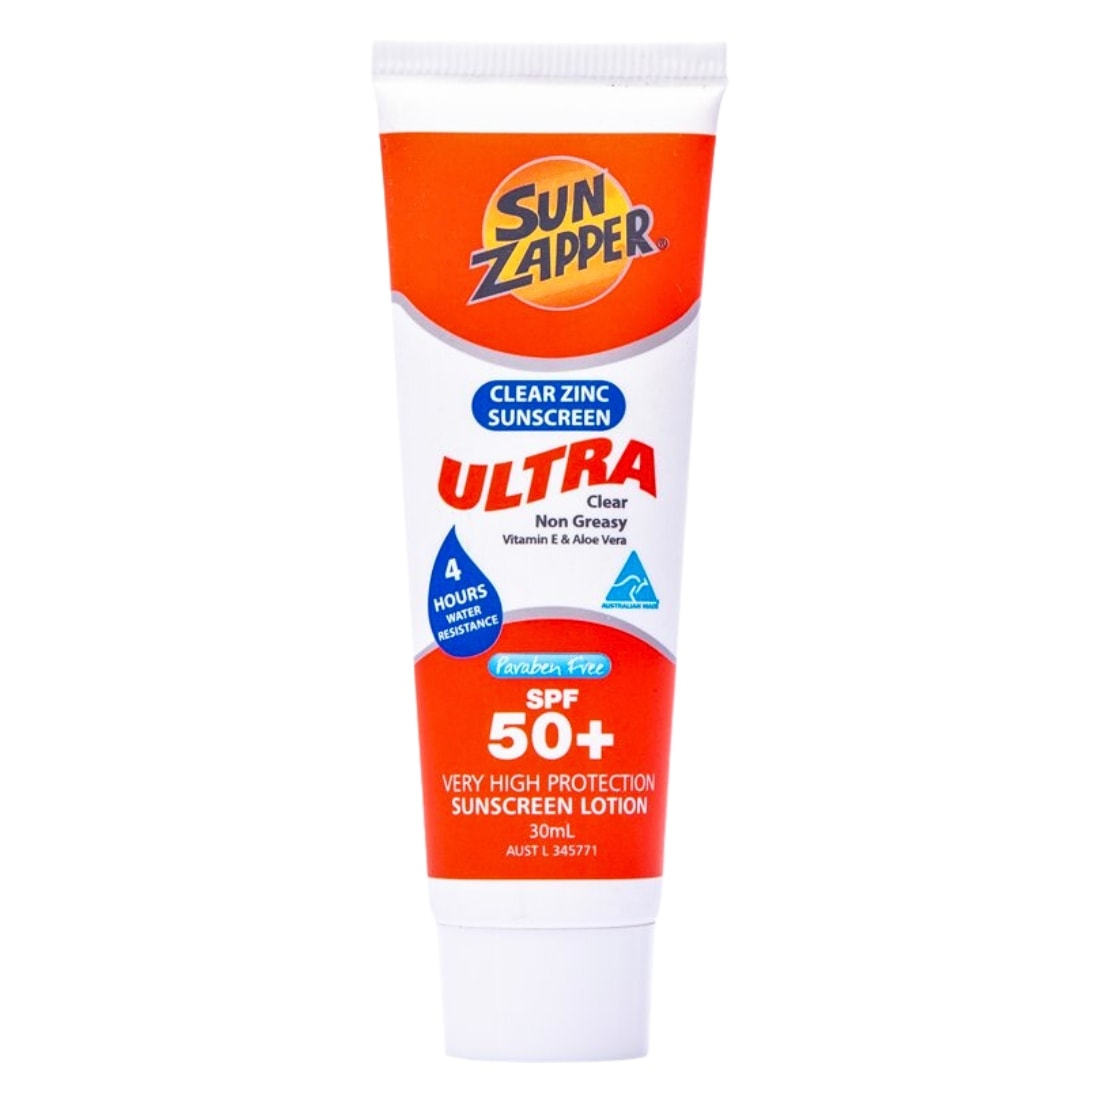 Sun Zapper Clear Zinc Ultra Spf50+ Travel Size Sunscreen Lotion - Clear - Sunscreen by Sun Zapper 30ml